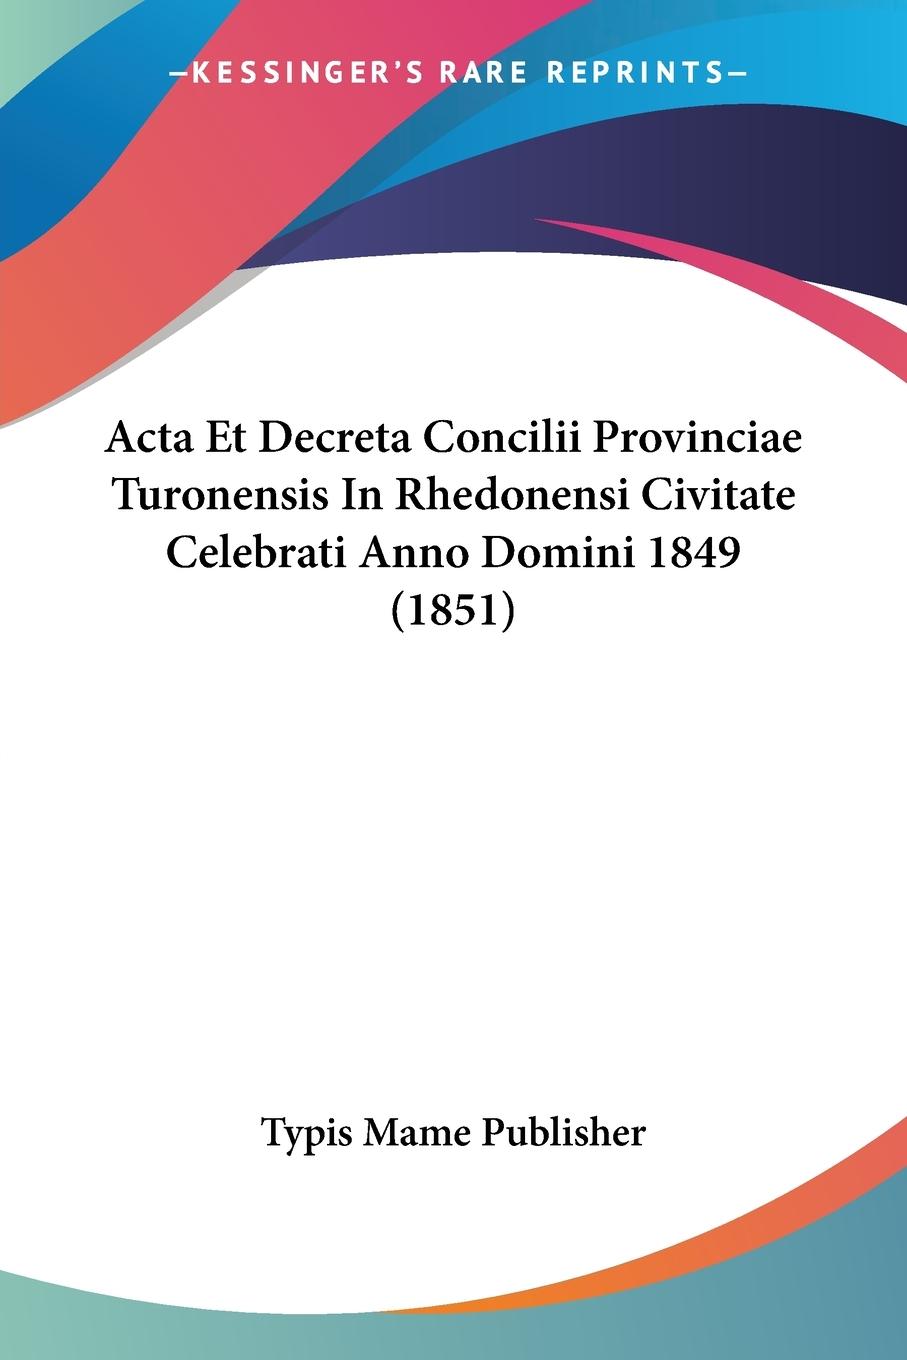 Acta Et Decreta Concilii Provinciae Turonensis In Rhedonensi Civitate Celebrati Anno Domini 1849 (1851) - Typis Mame Publisher